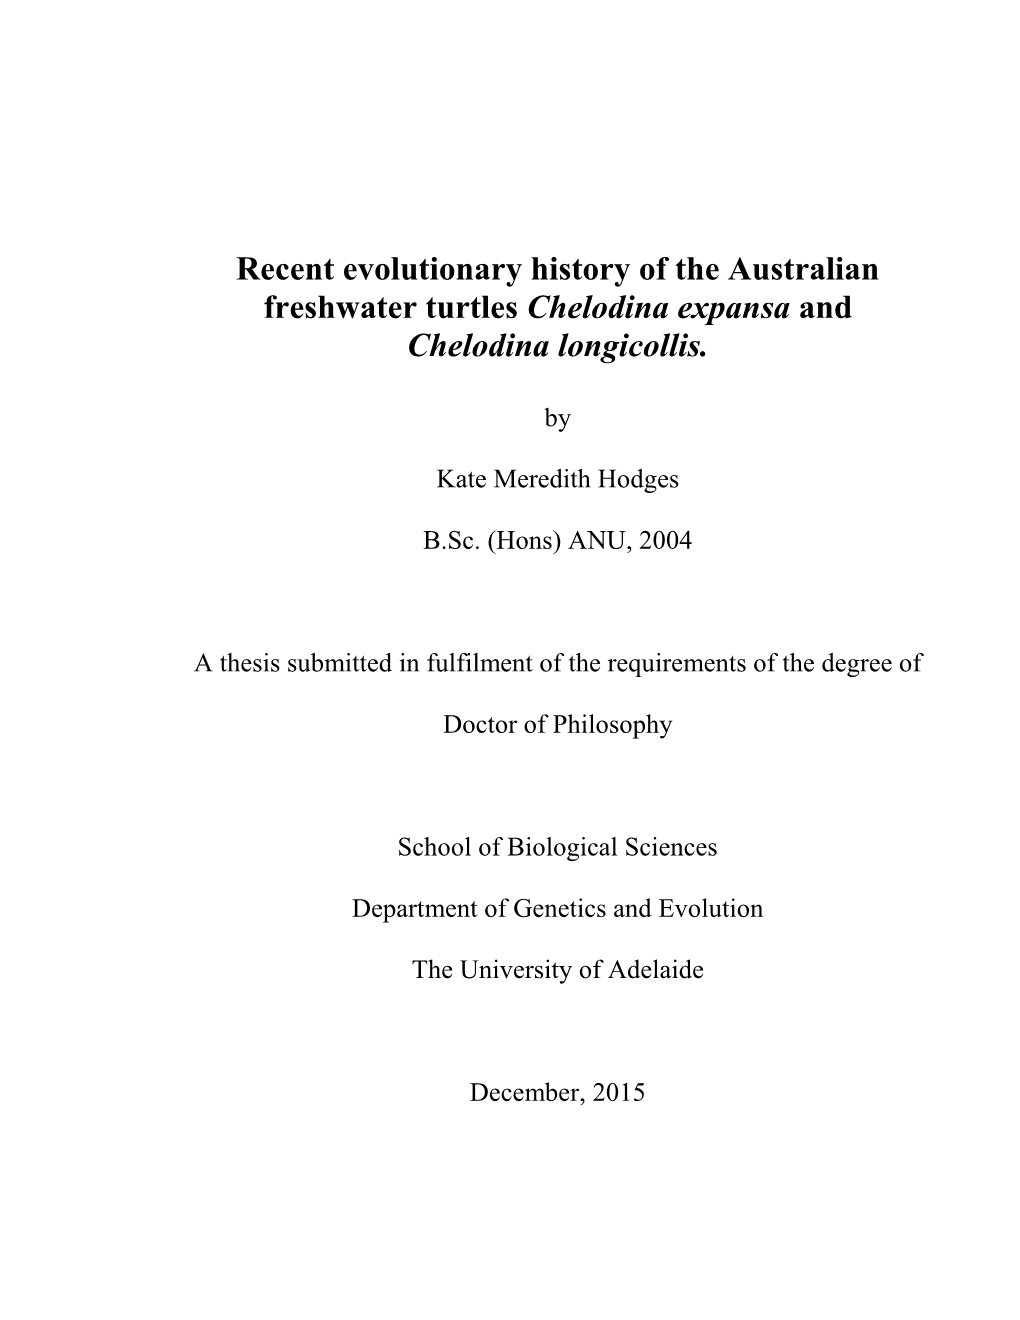 Recent Evolutionary History of the Australian Freshwater Turtles Chelodina Expansa and Chelodina Longicollis